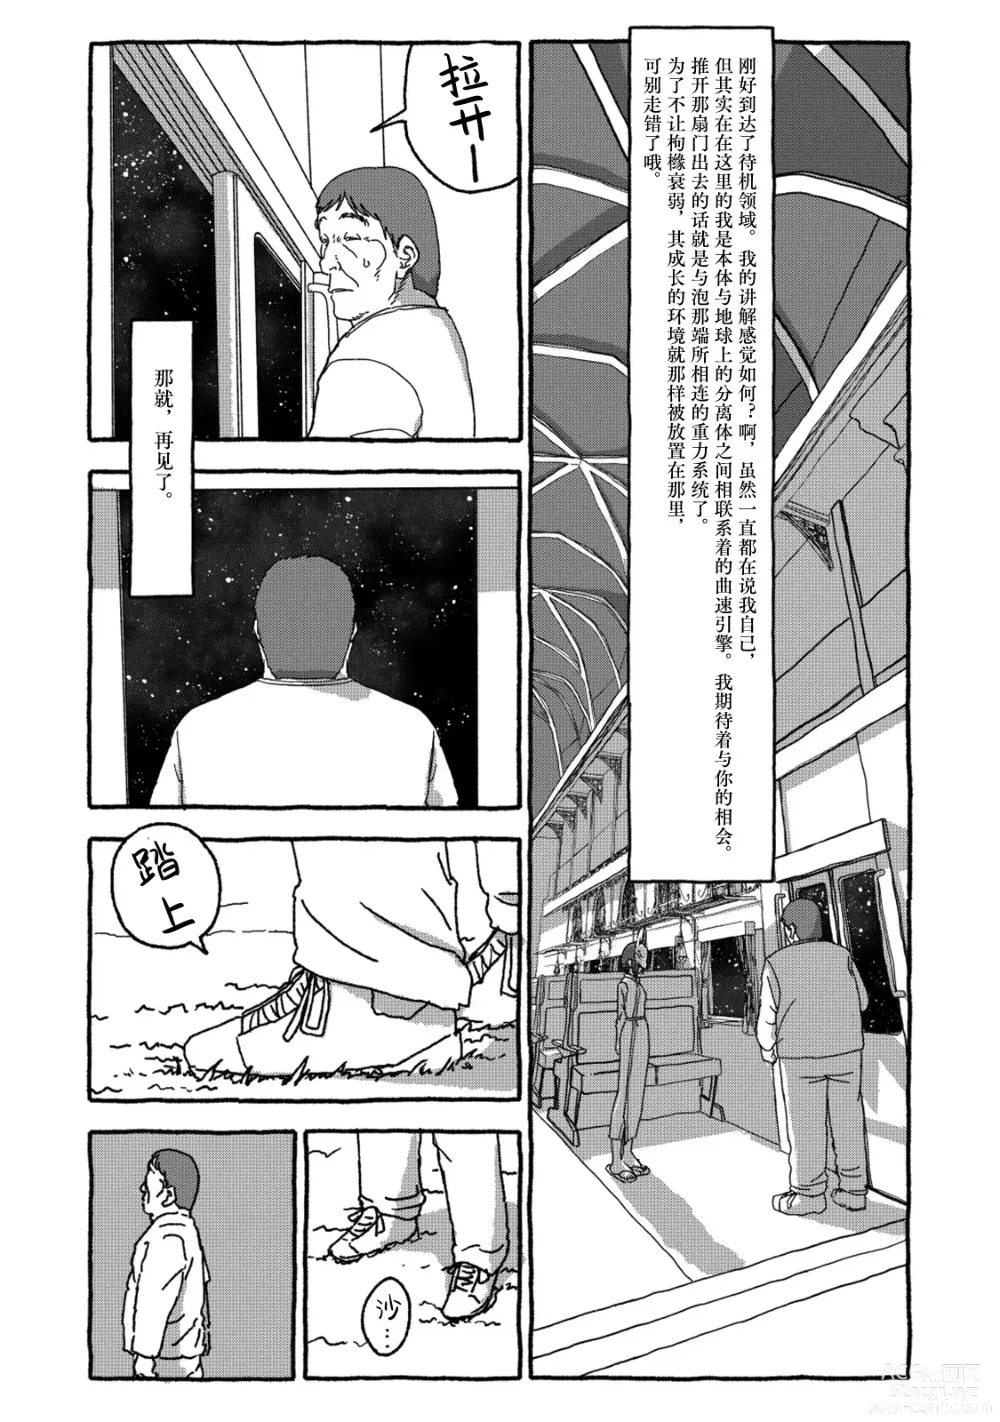 Page 131 of doujinshi 相遇四光年后合体 中篇